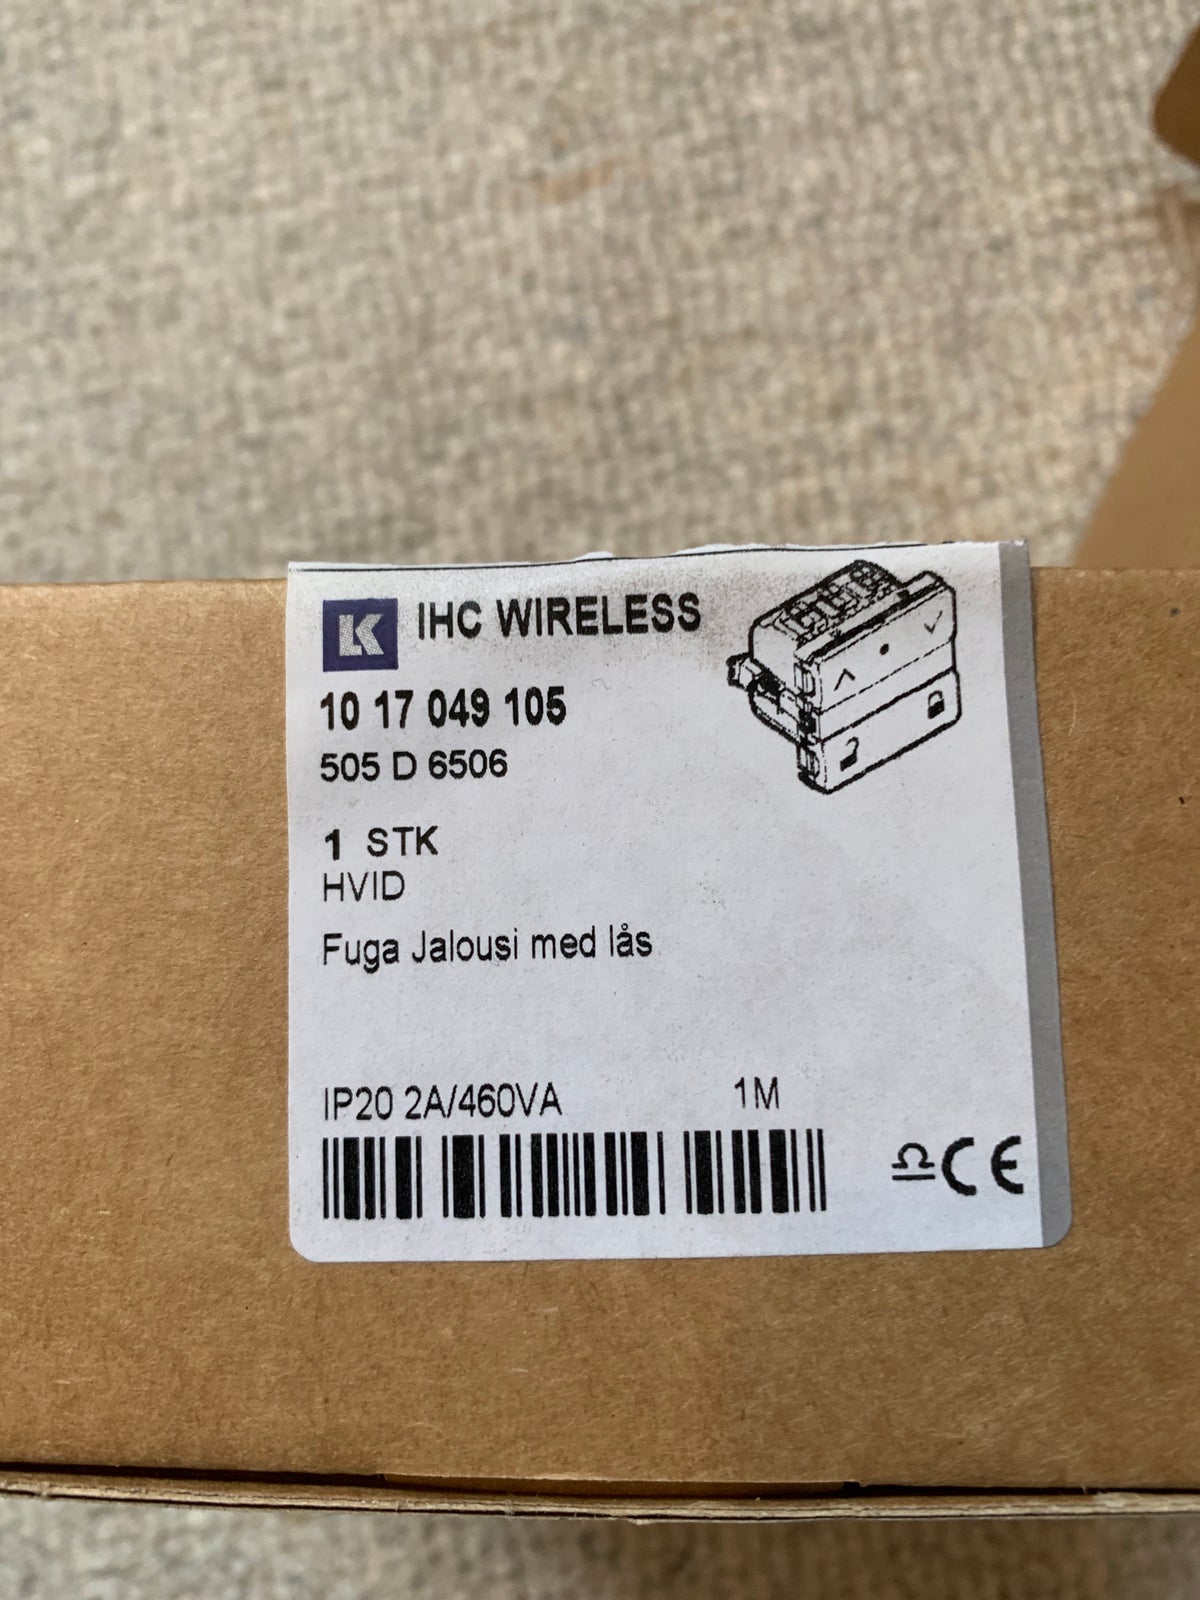 IHC wireless, LK